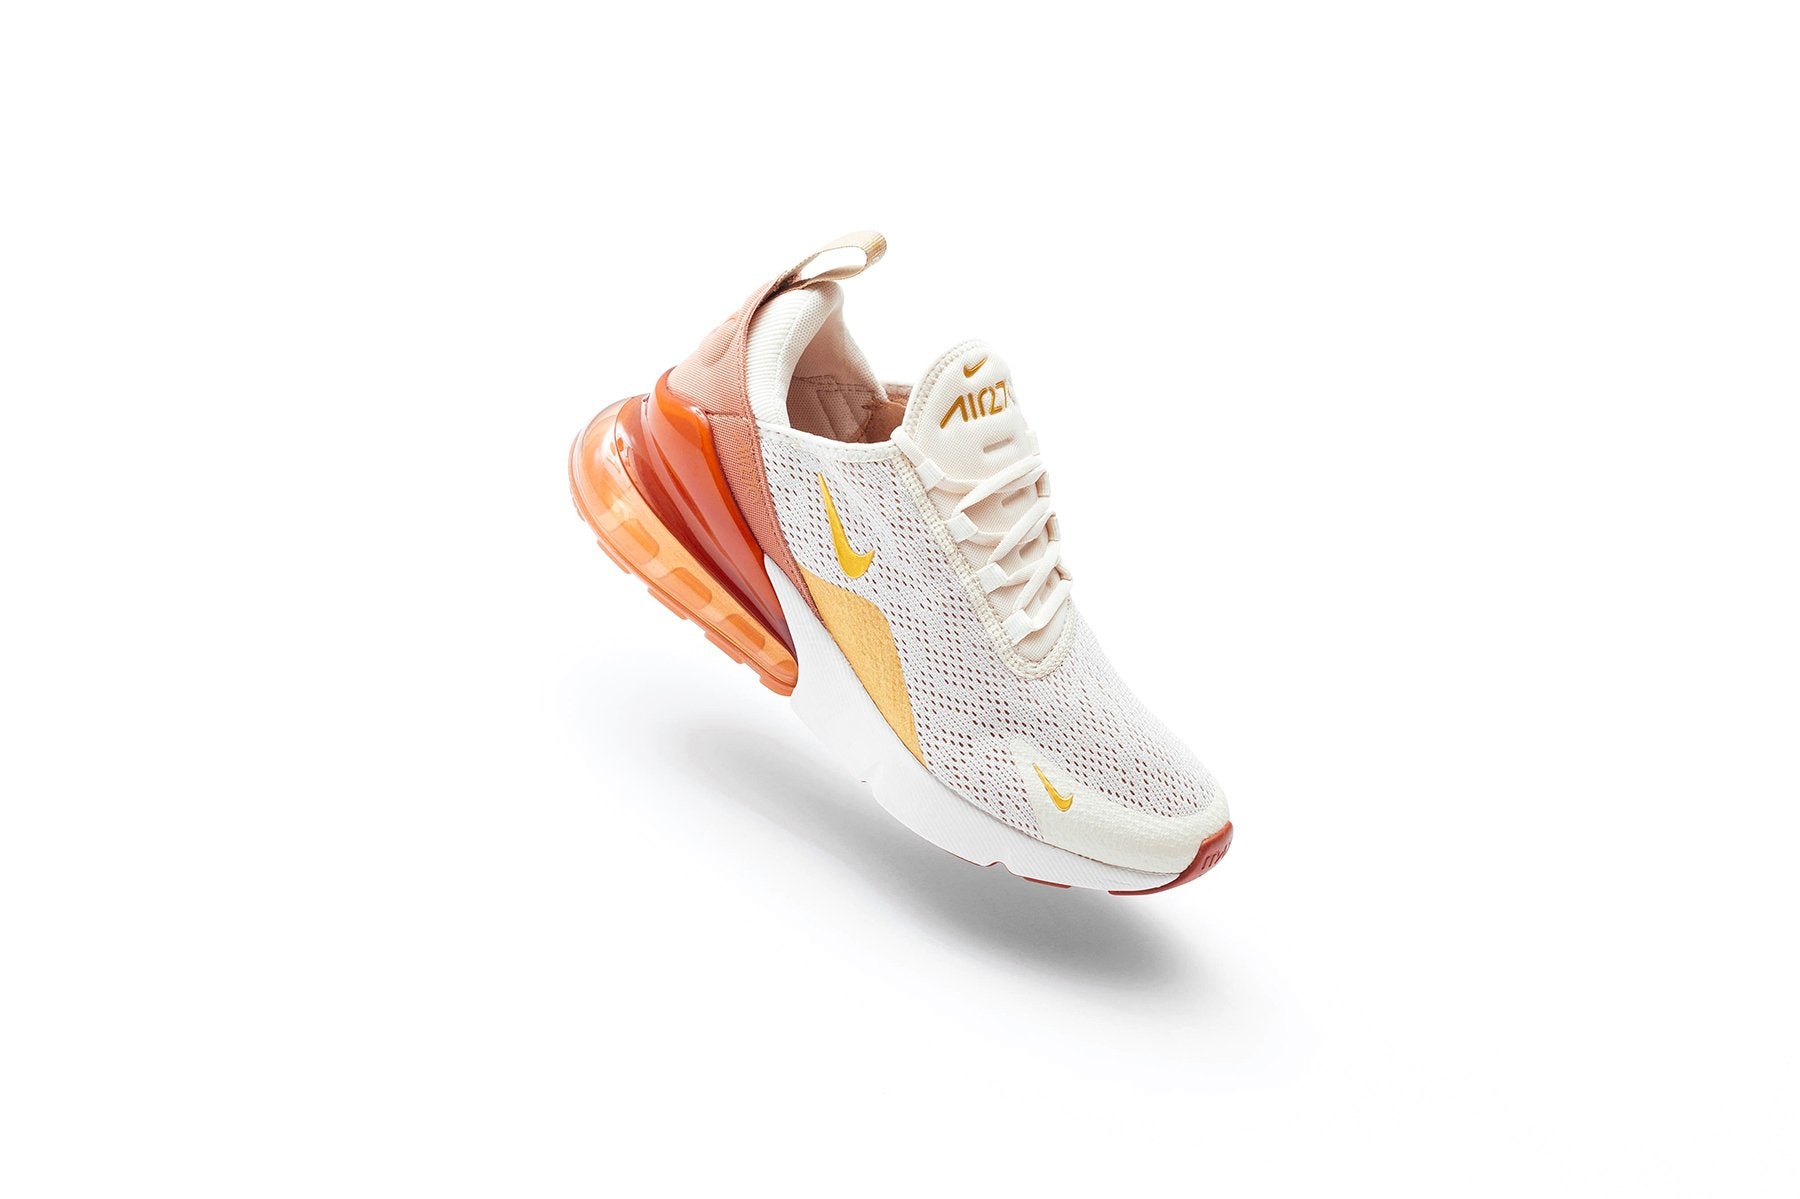 Nike Women's Air Max 270 "Light Cream/Metallic Gold-Terra Blush" Feature